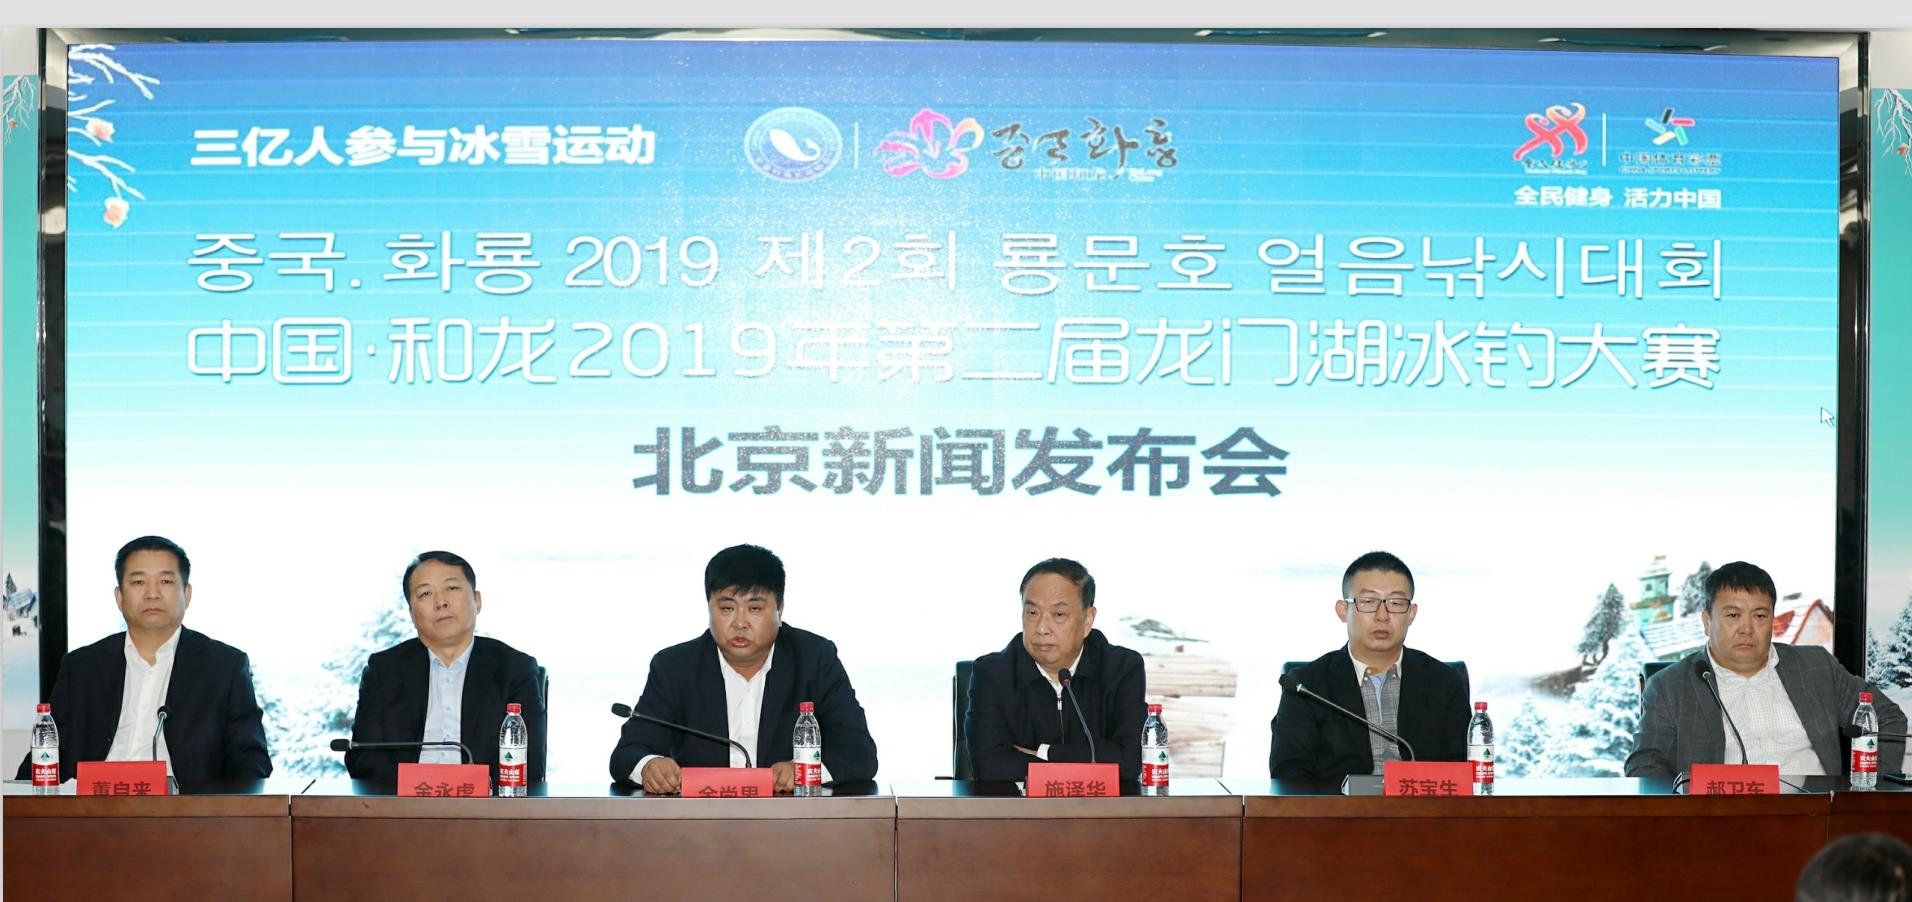 u2019年第二屆龍門湖冰釣大賽v在京舉辦發佈會 ]記者朱燁 攝^ 